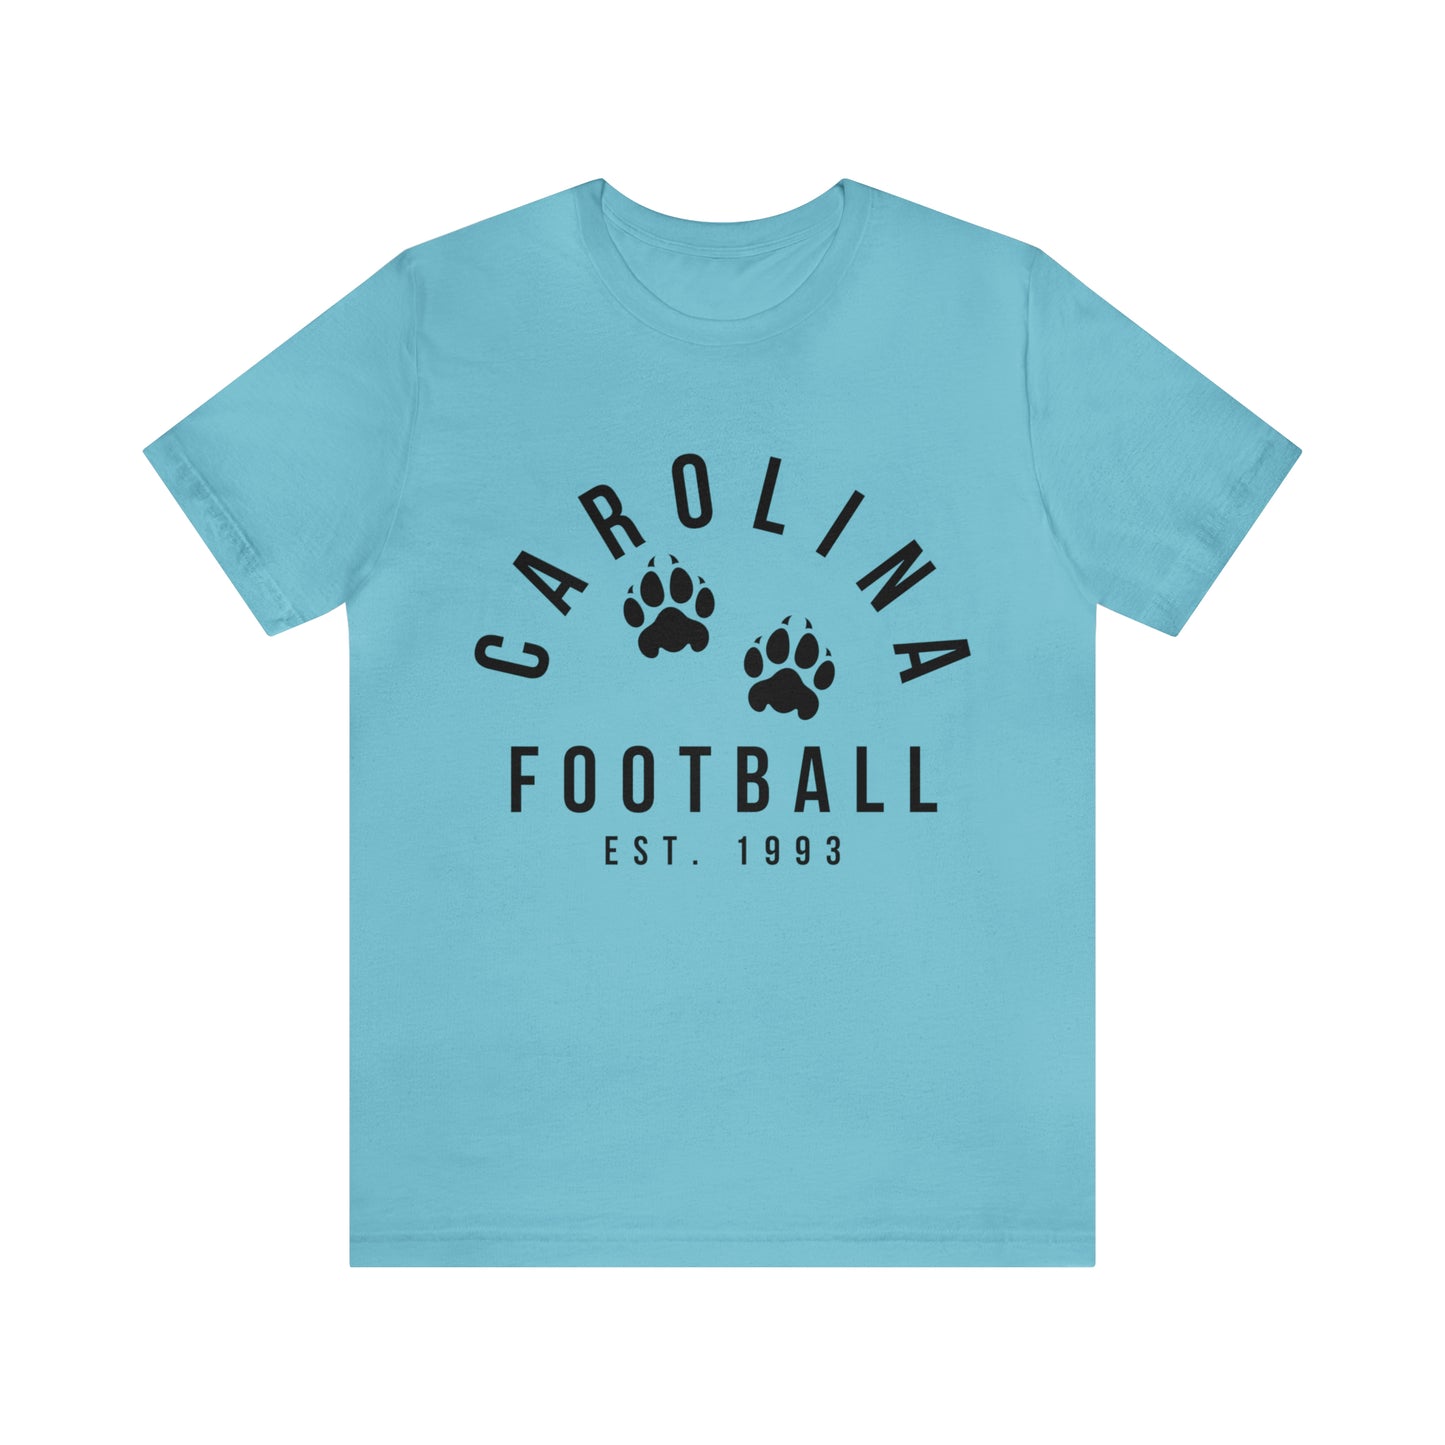 Vintage Carolina Panthers T-Shirt - Retro Short Sleeve Tee NFL Football Oversized Apparel - Vintage Men's and Women's - Design 4 Aqua Blue